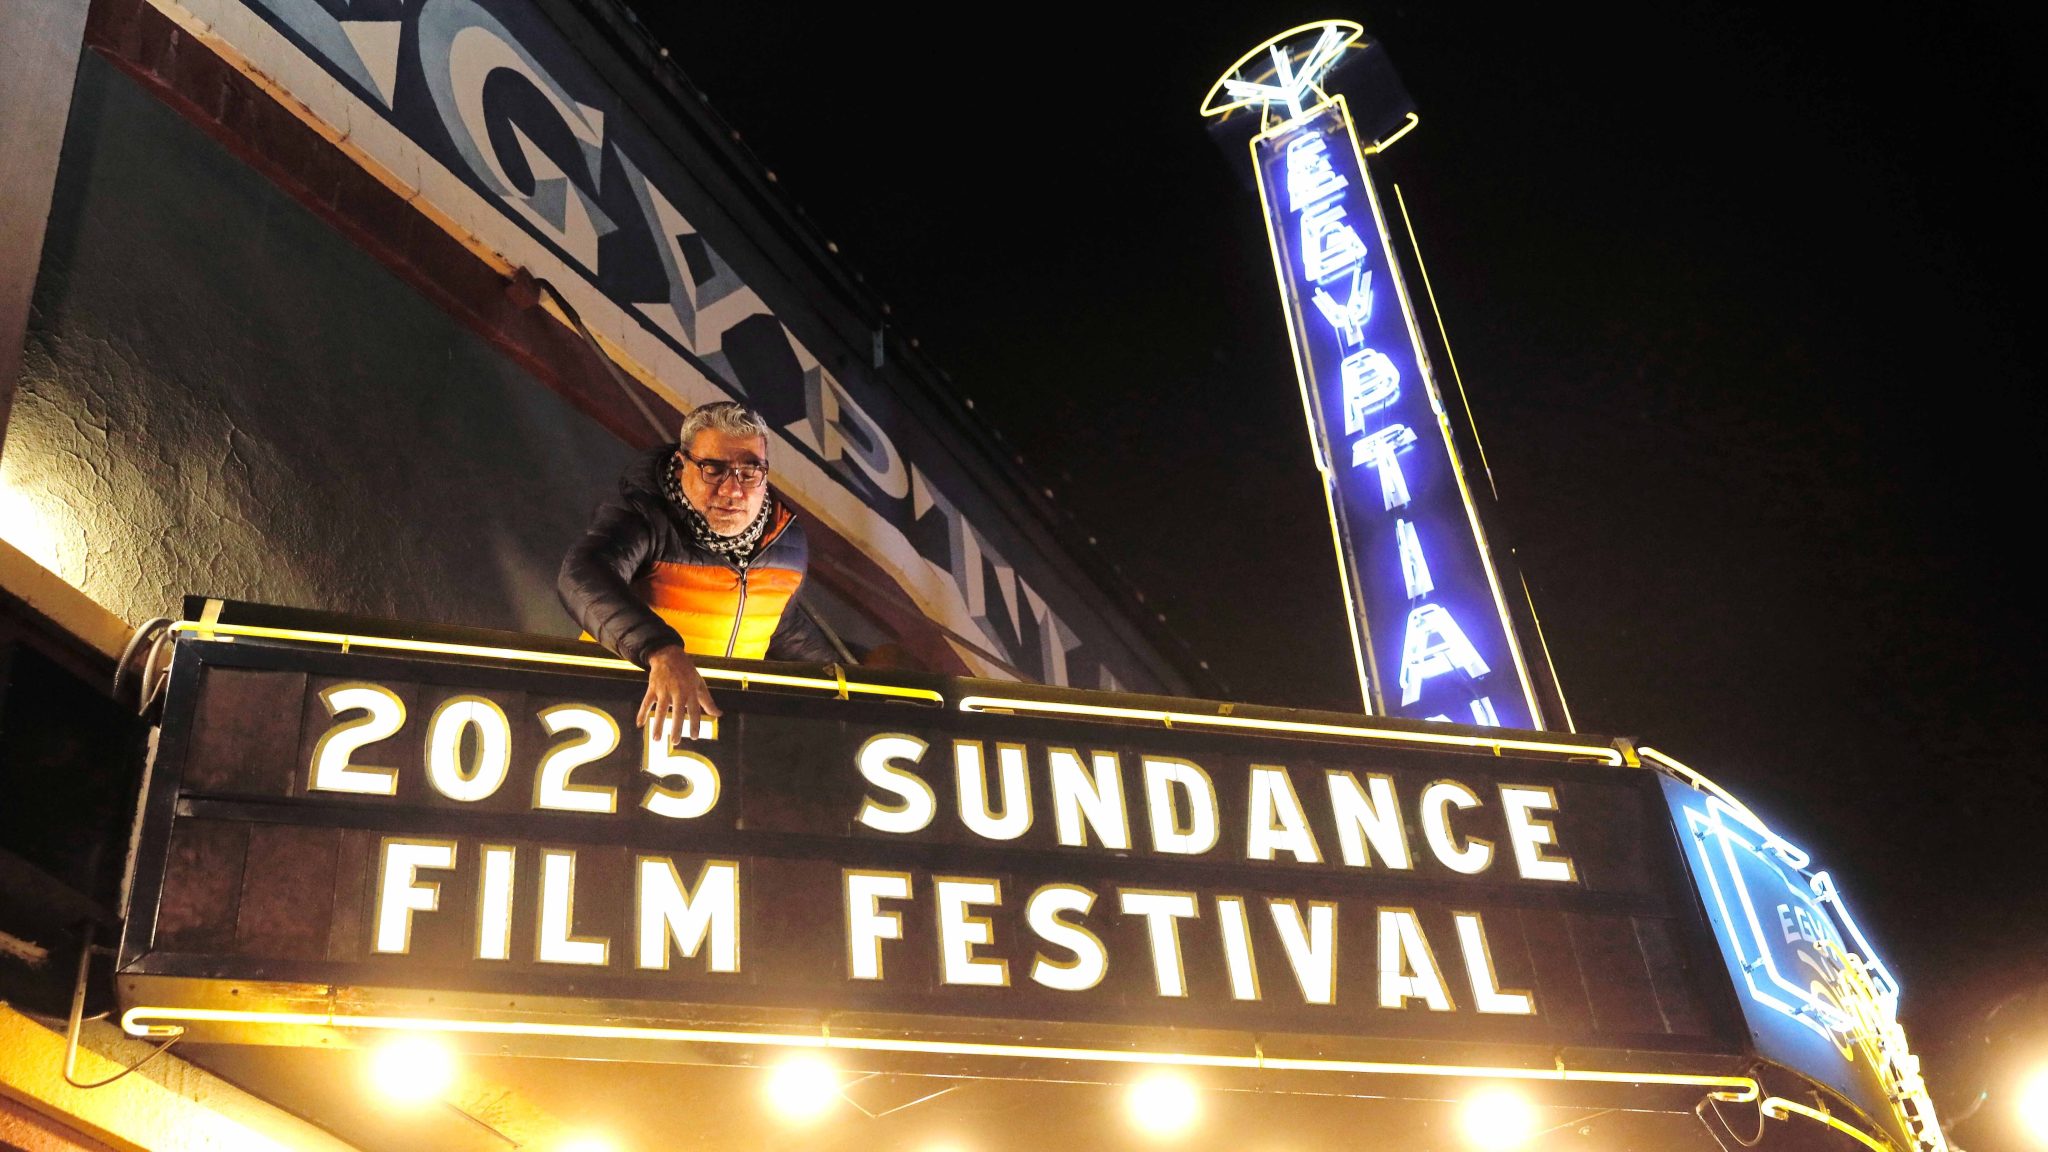 2025 sundance film festival egyptian theatre marquee